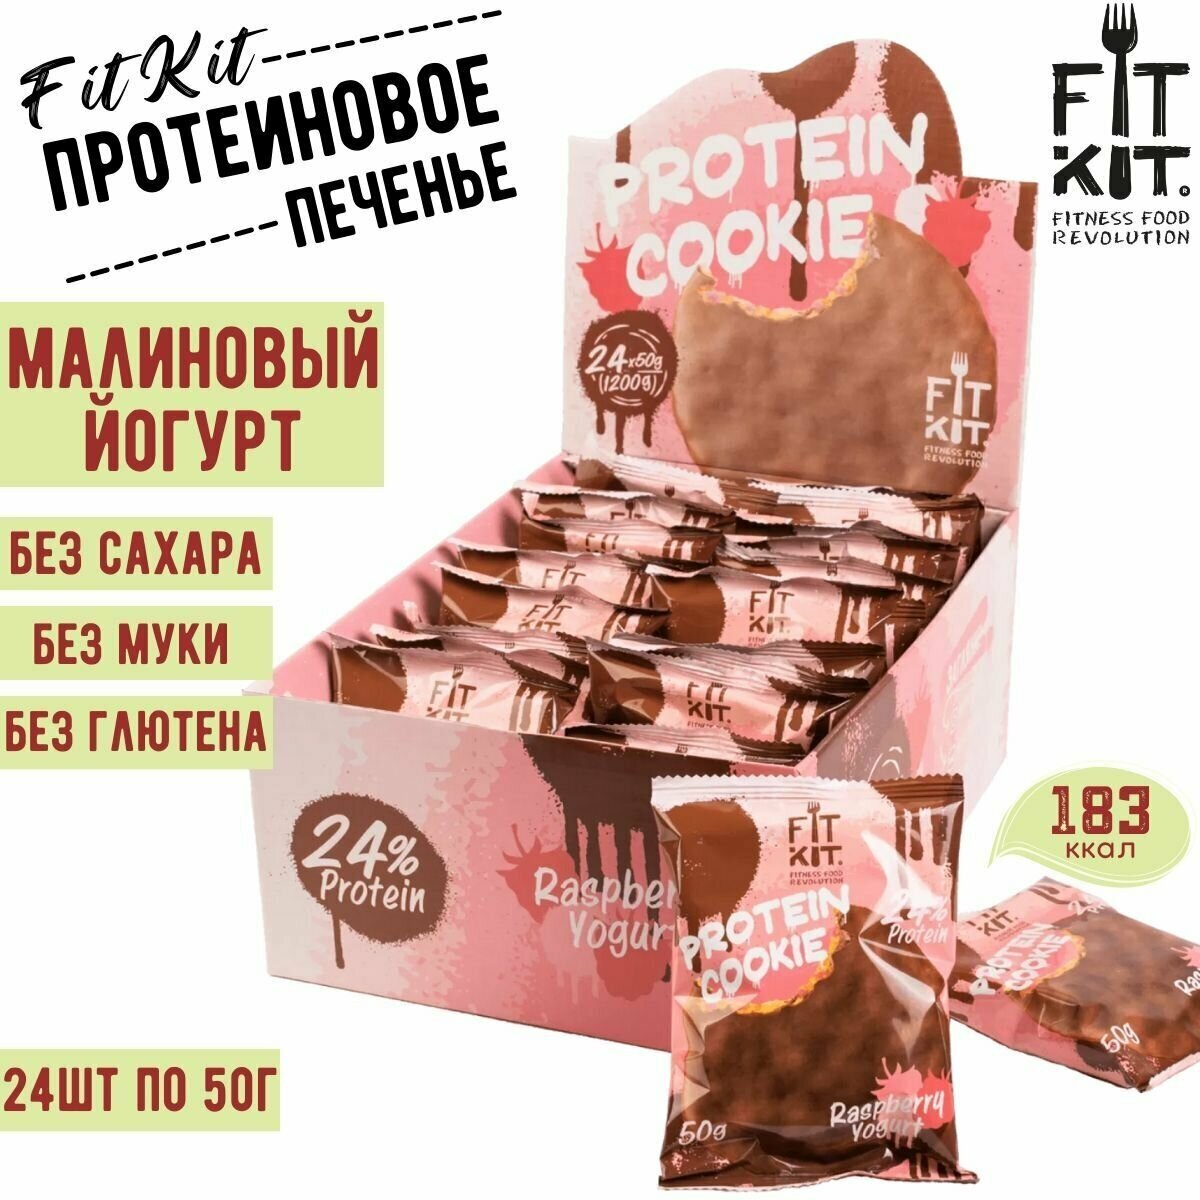 Протеиновое печенье FIT KIT Choco Protein Cookie Малиновый йогурт 24 шт по 50 г , фиткит